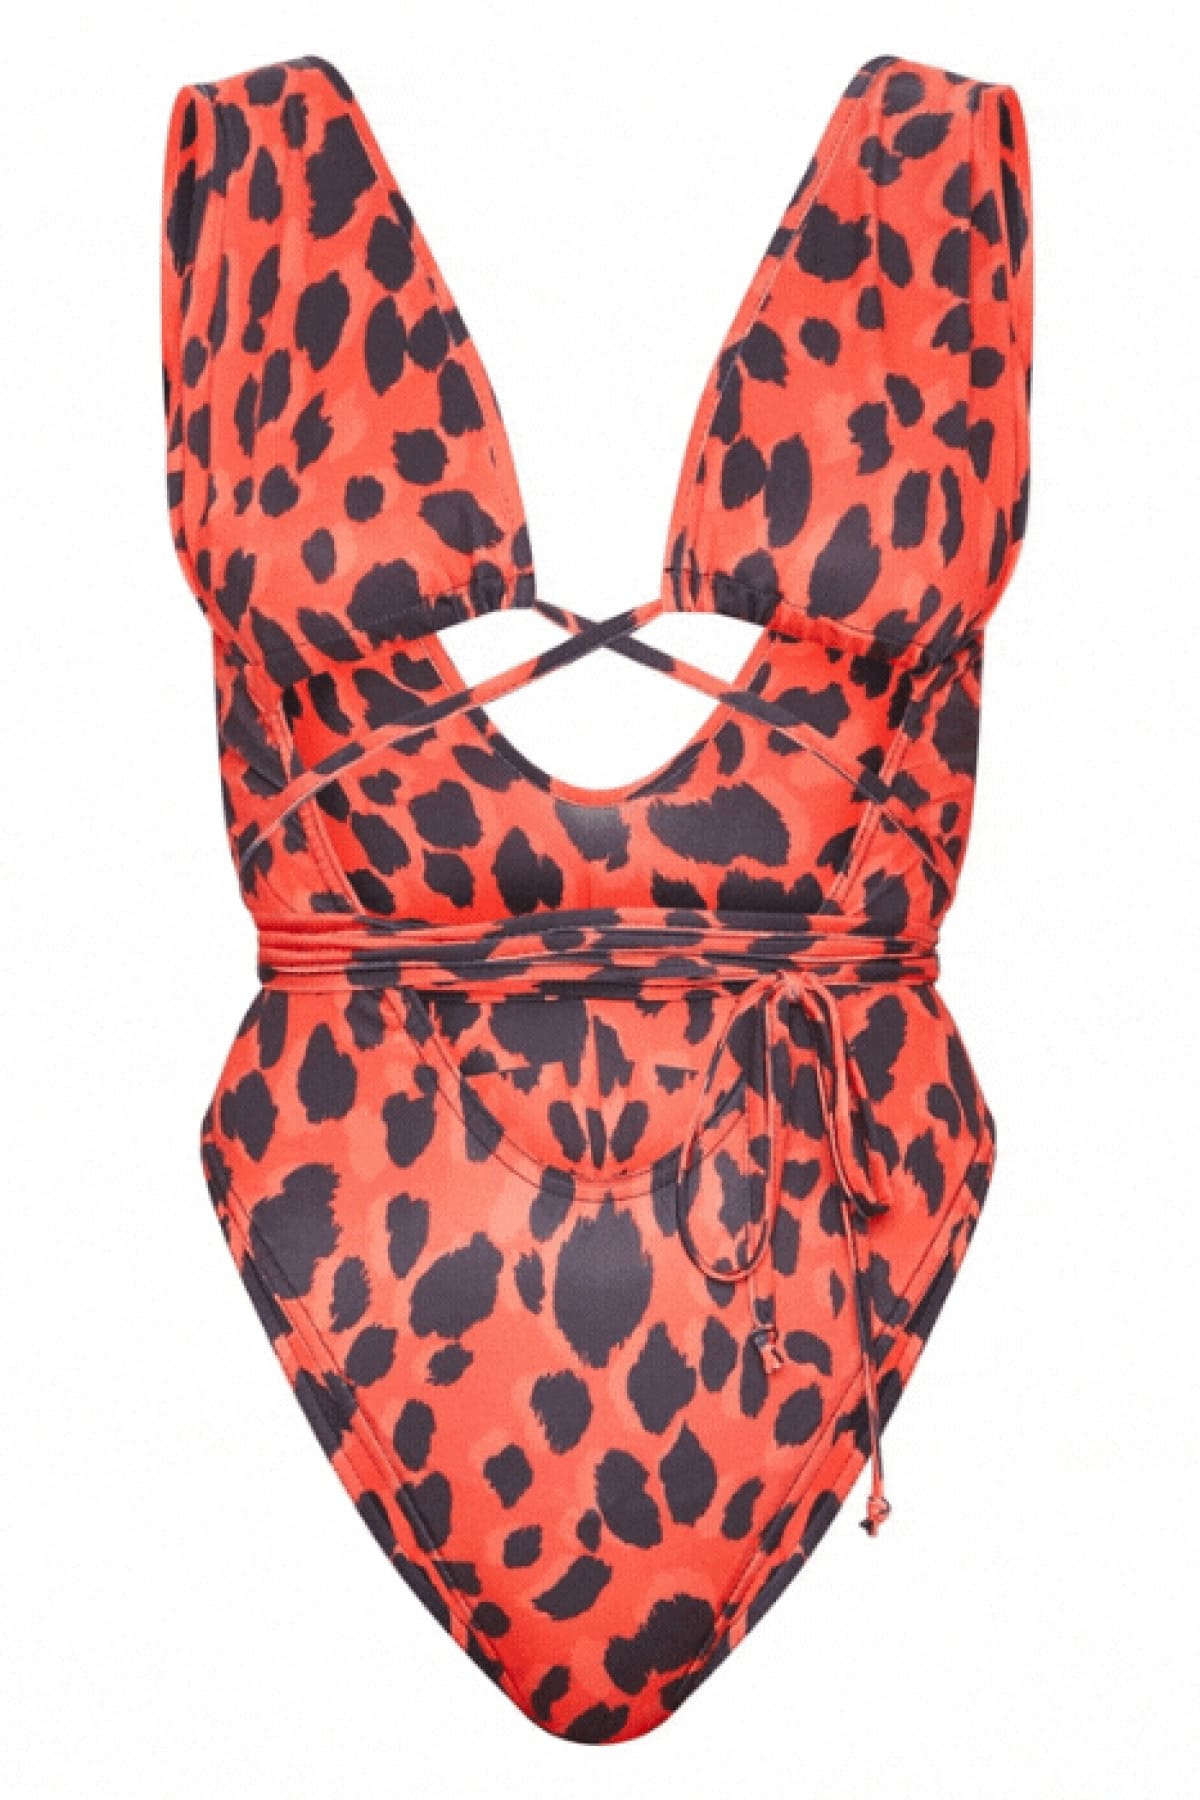 Red Cheetah High Cut Wrap One Piece Swimsuit Monokini